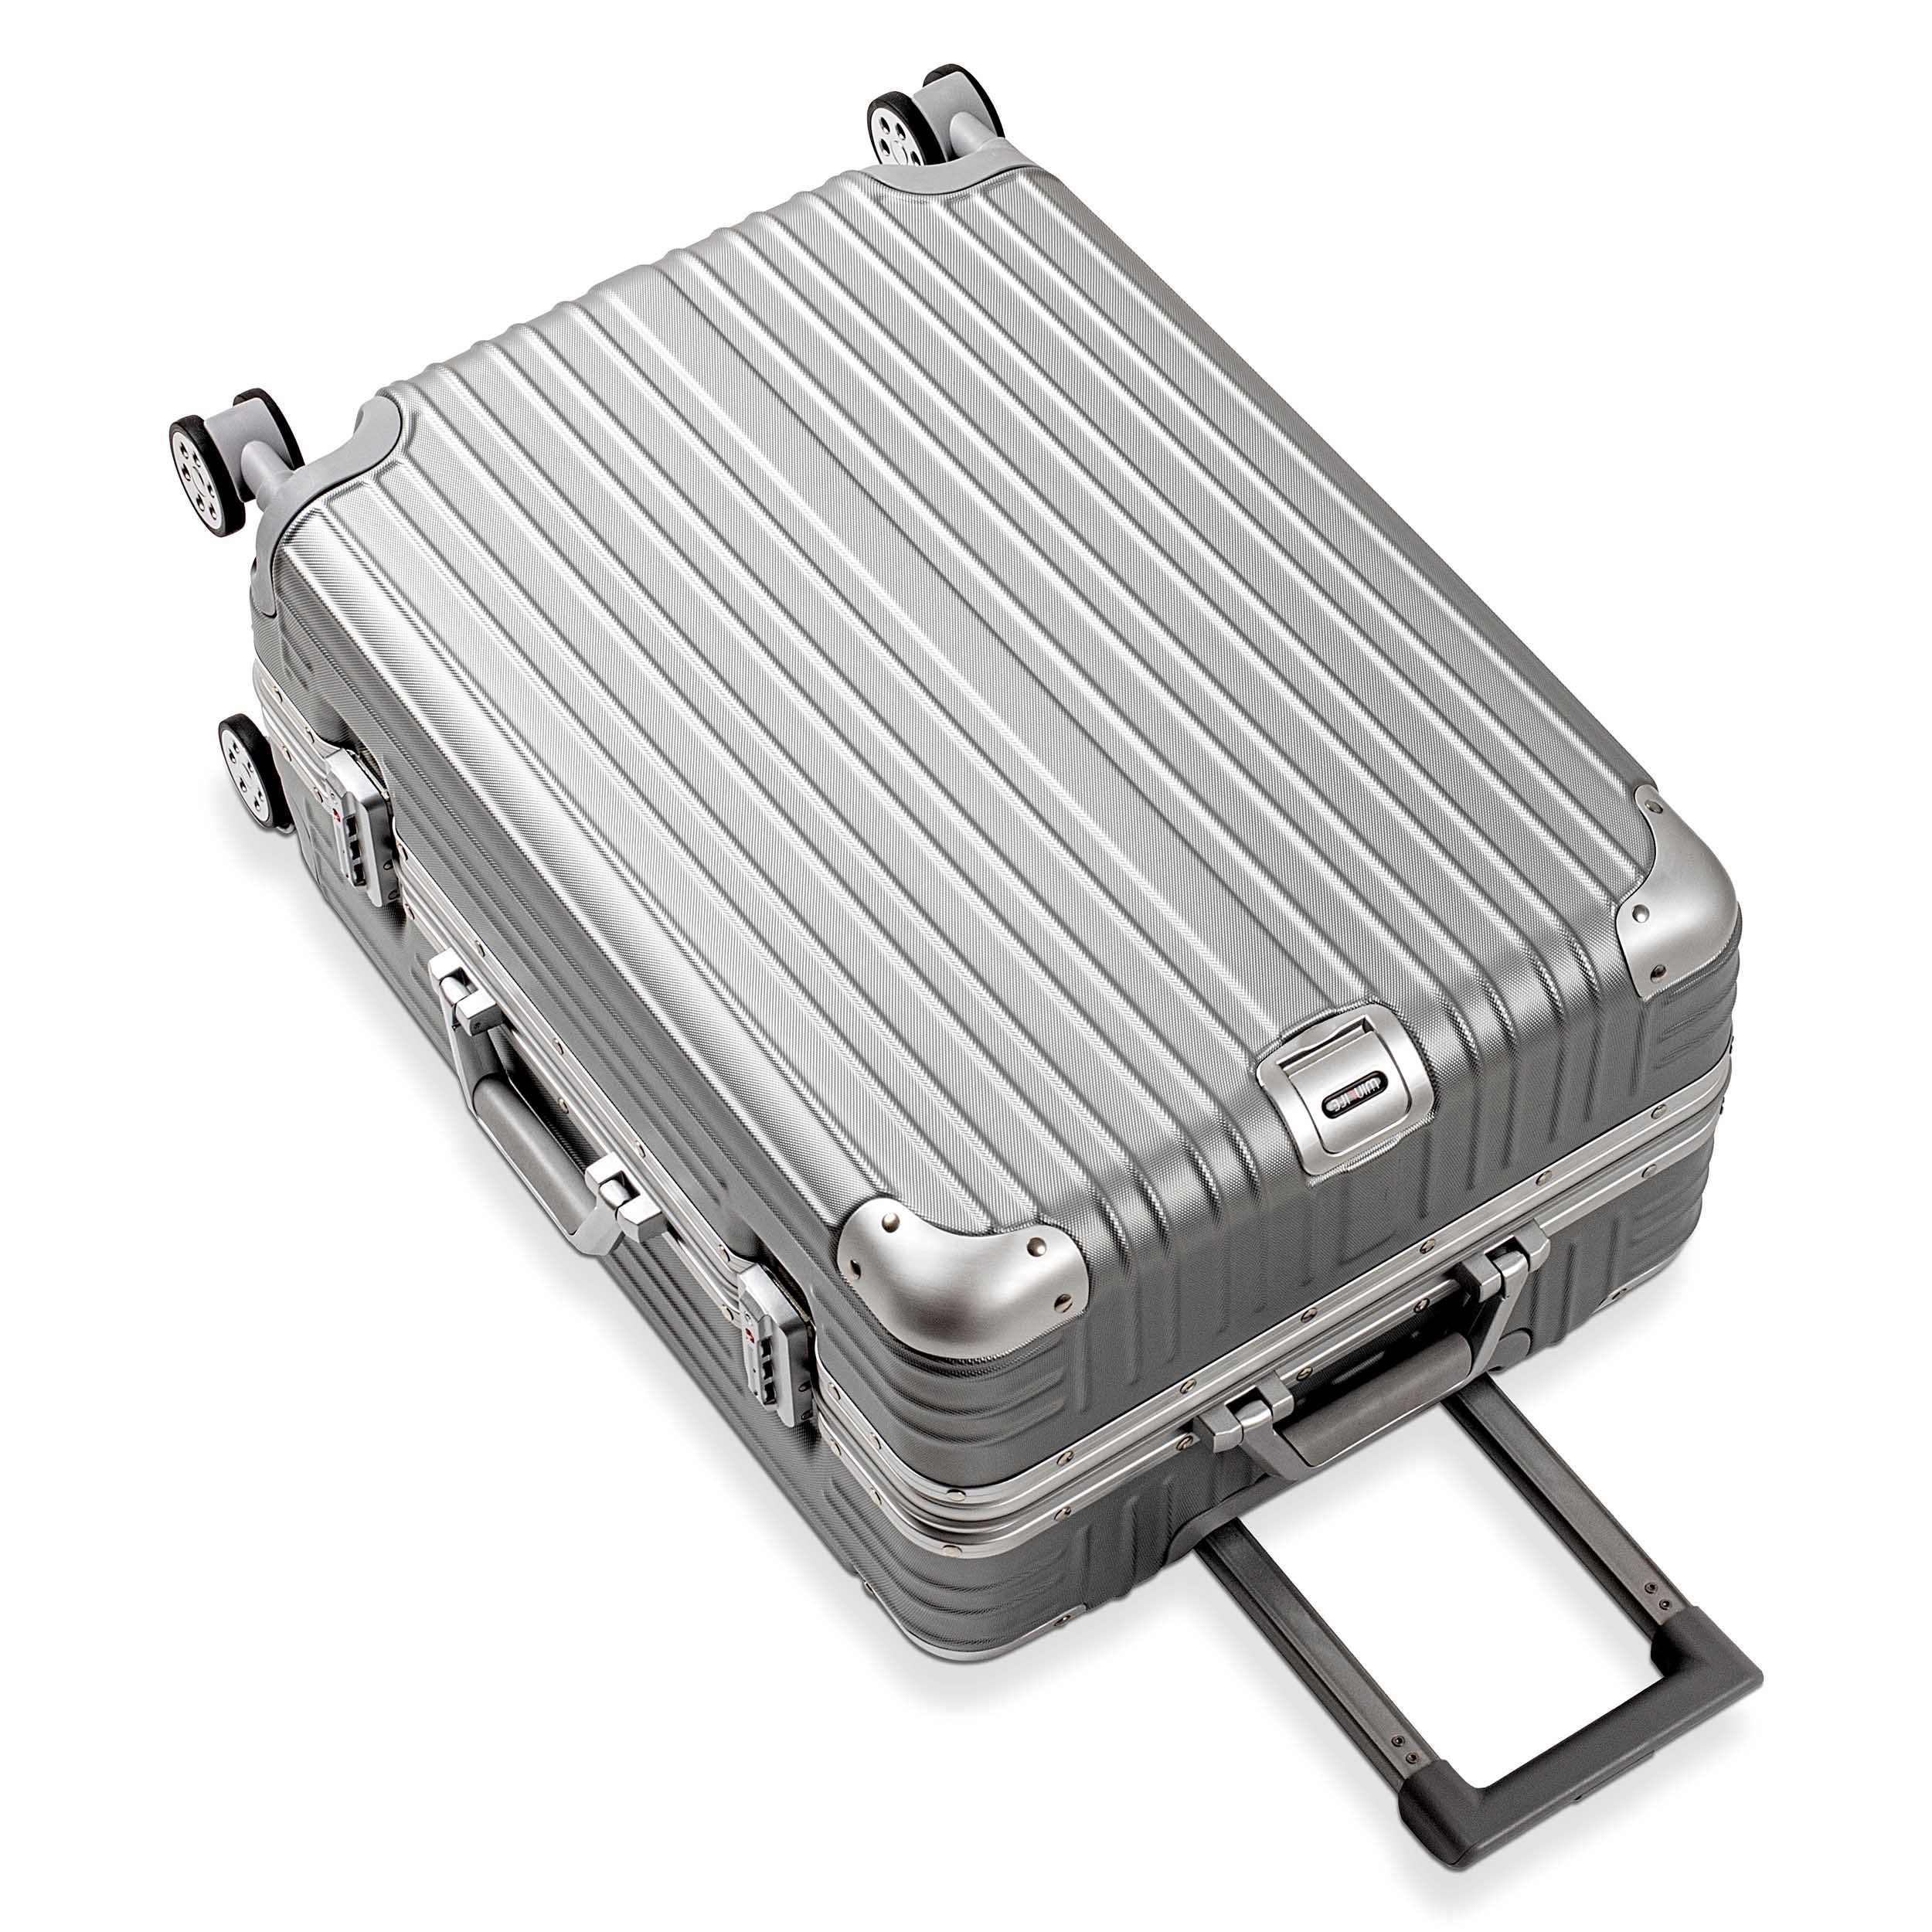 WINLIFE Koffer Reisekoffer, SET ABS SPARSET große Checkin-Trolley(67cm) TSA Alu-Rahmen, & + mit Nummern-Schloss Koffer(77cm)